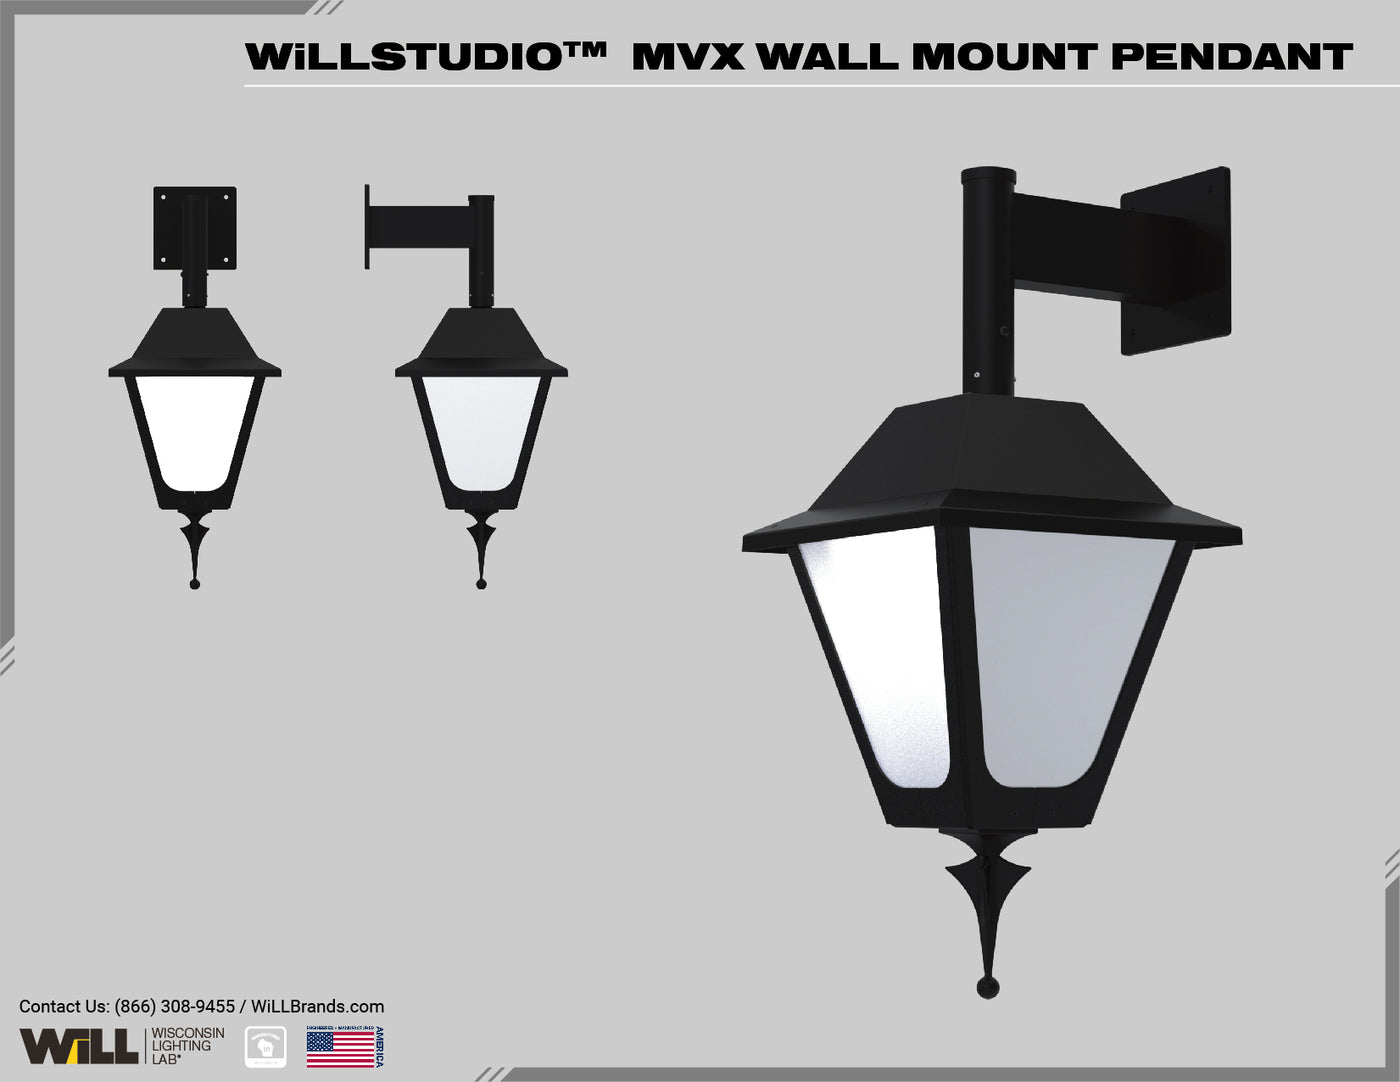 WiLLSTUDIO MVX WALL MOUNT PENDANT